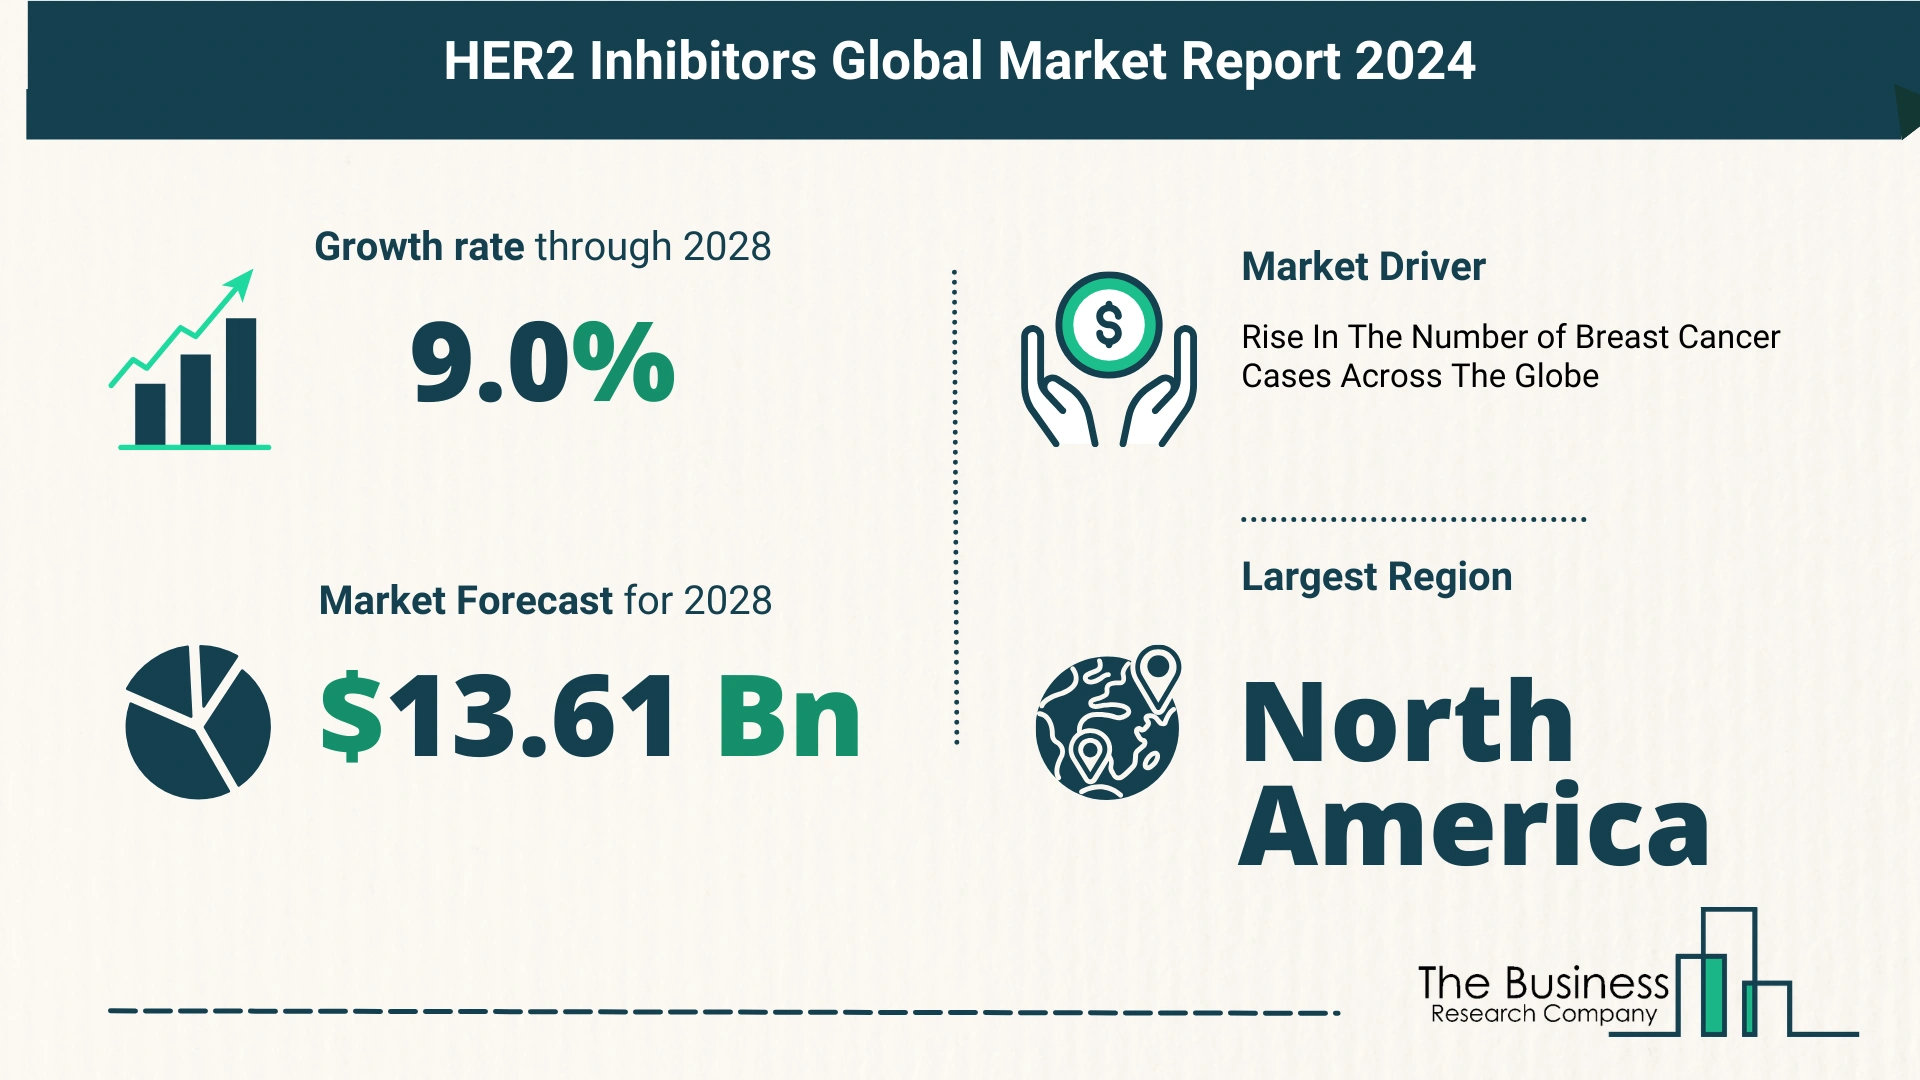 HER2 Inhibitors Market Forecast 2024: Forecast Market Size, Drivers And Key Segments